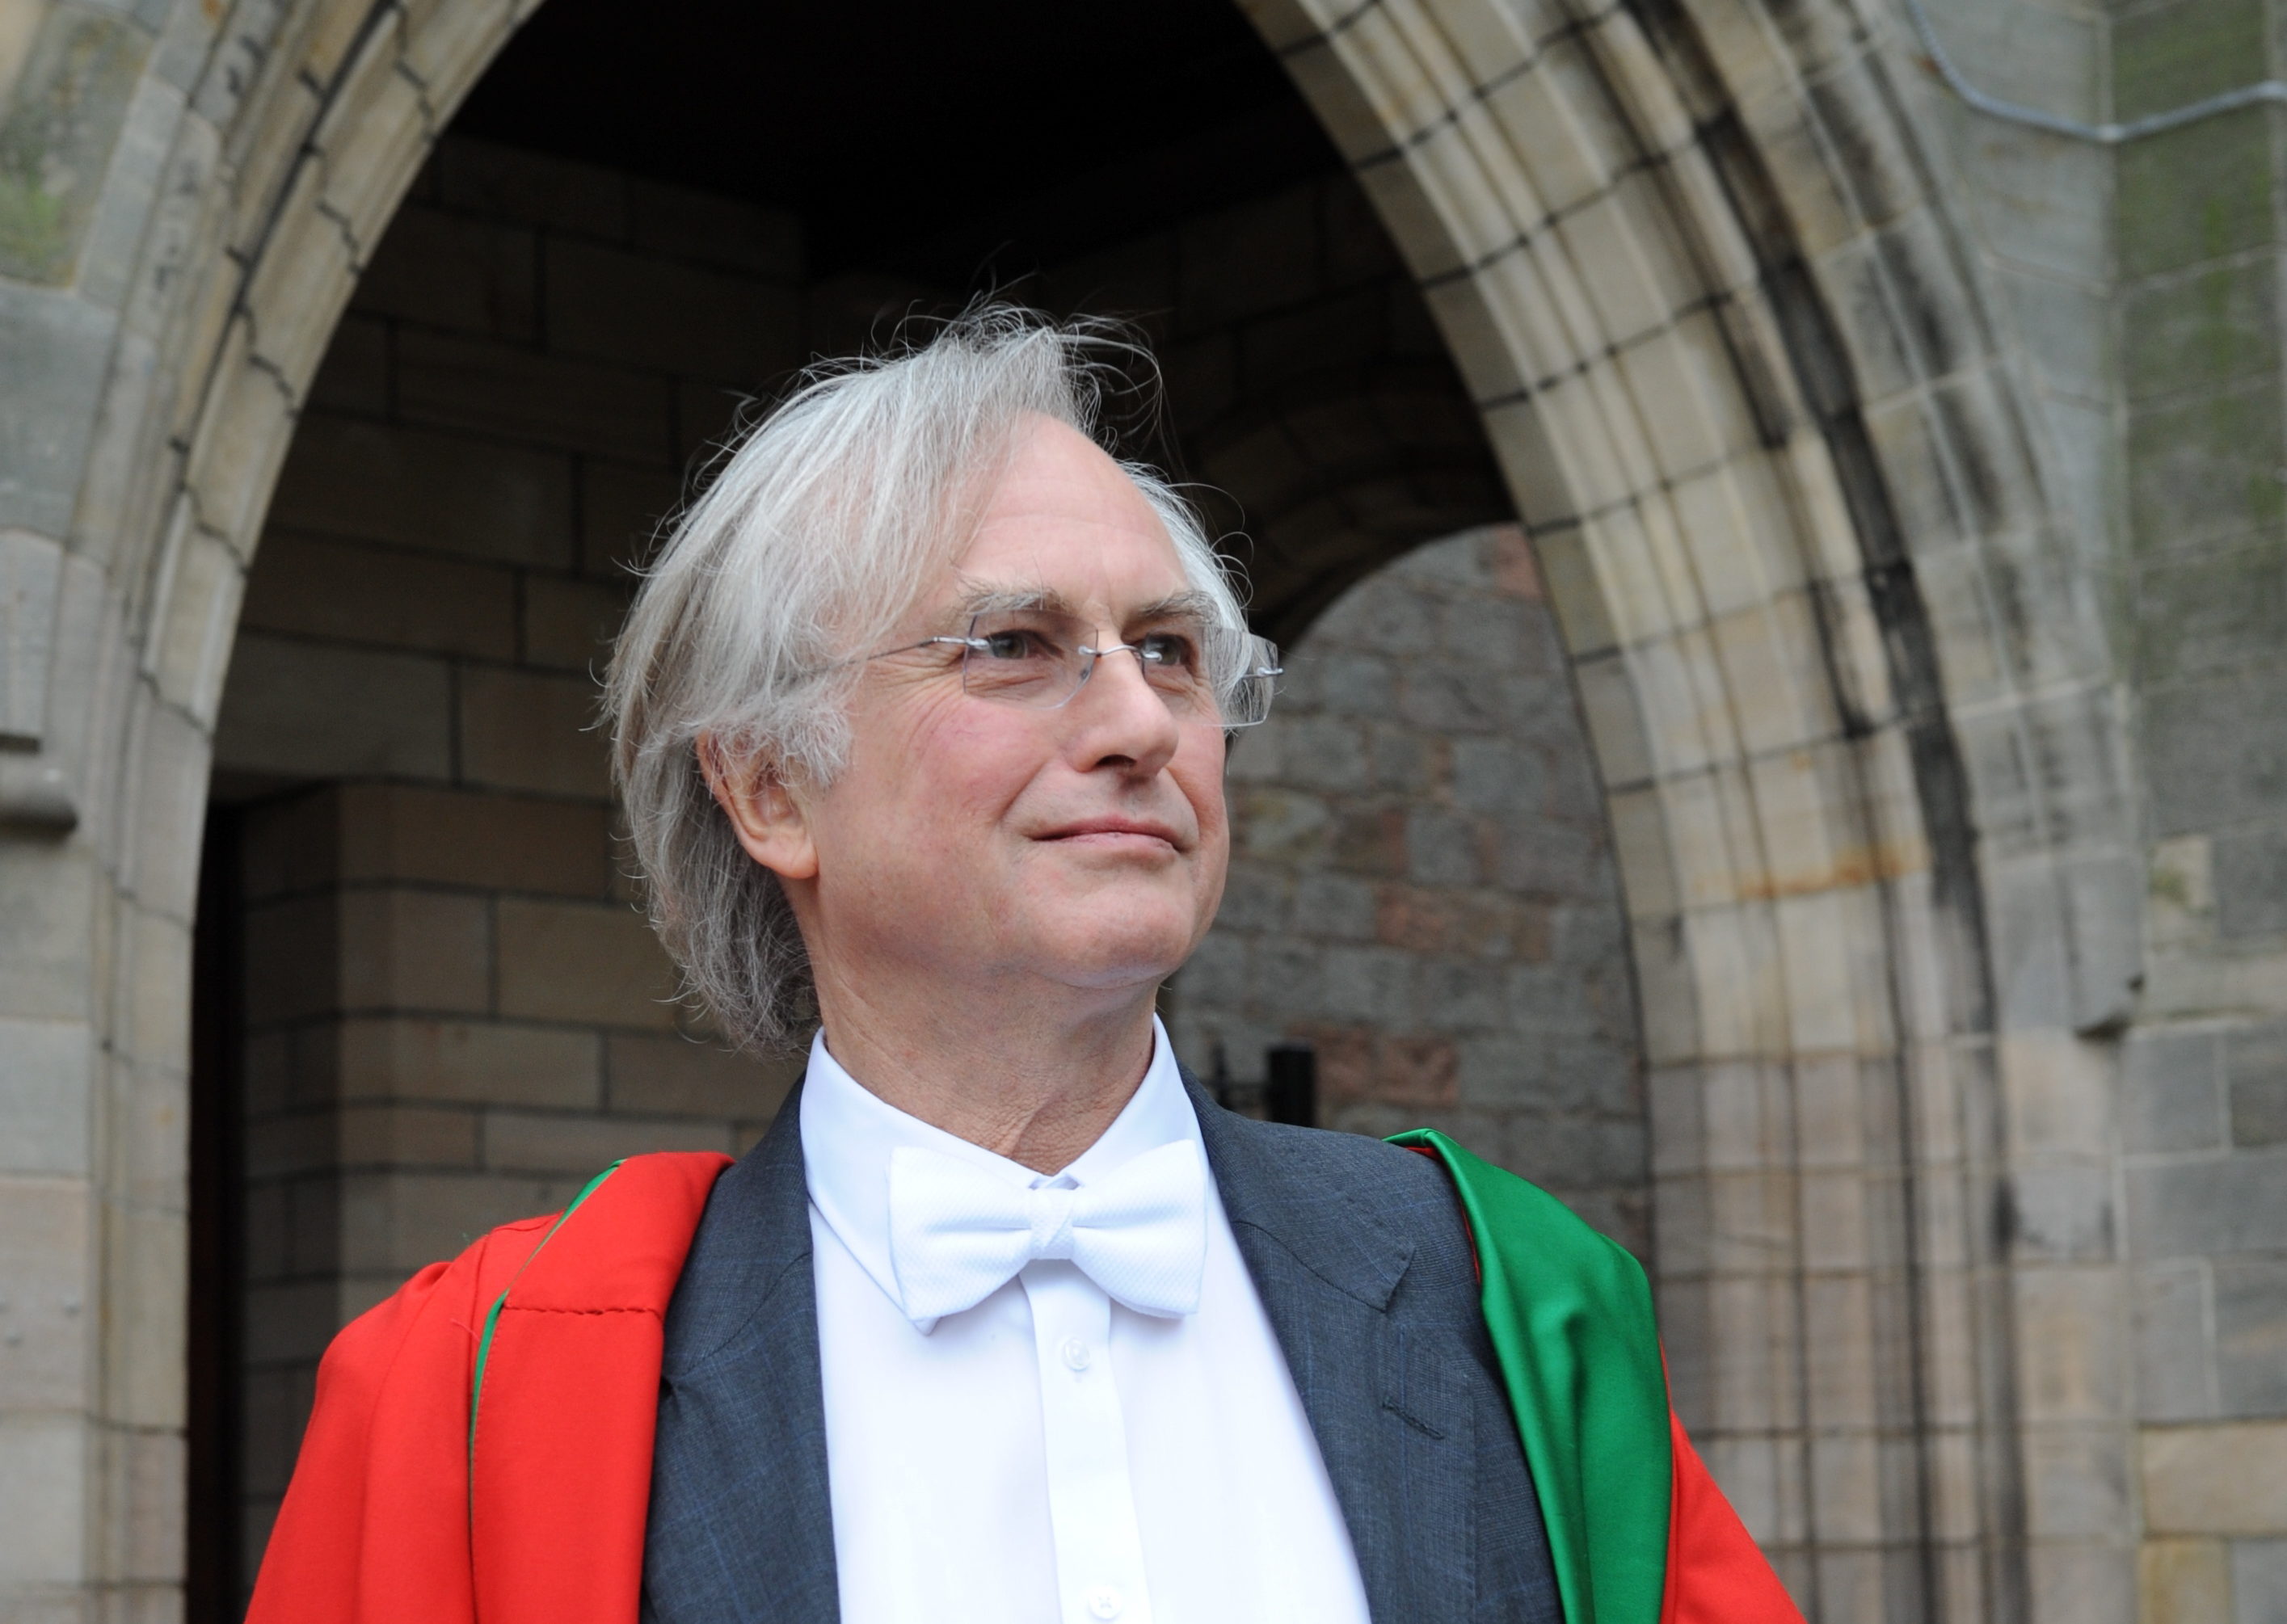 Professor Richard Dawkins FRS.
Picture by COLIN RENNIE.